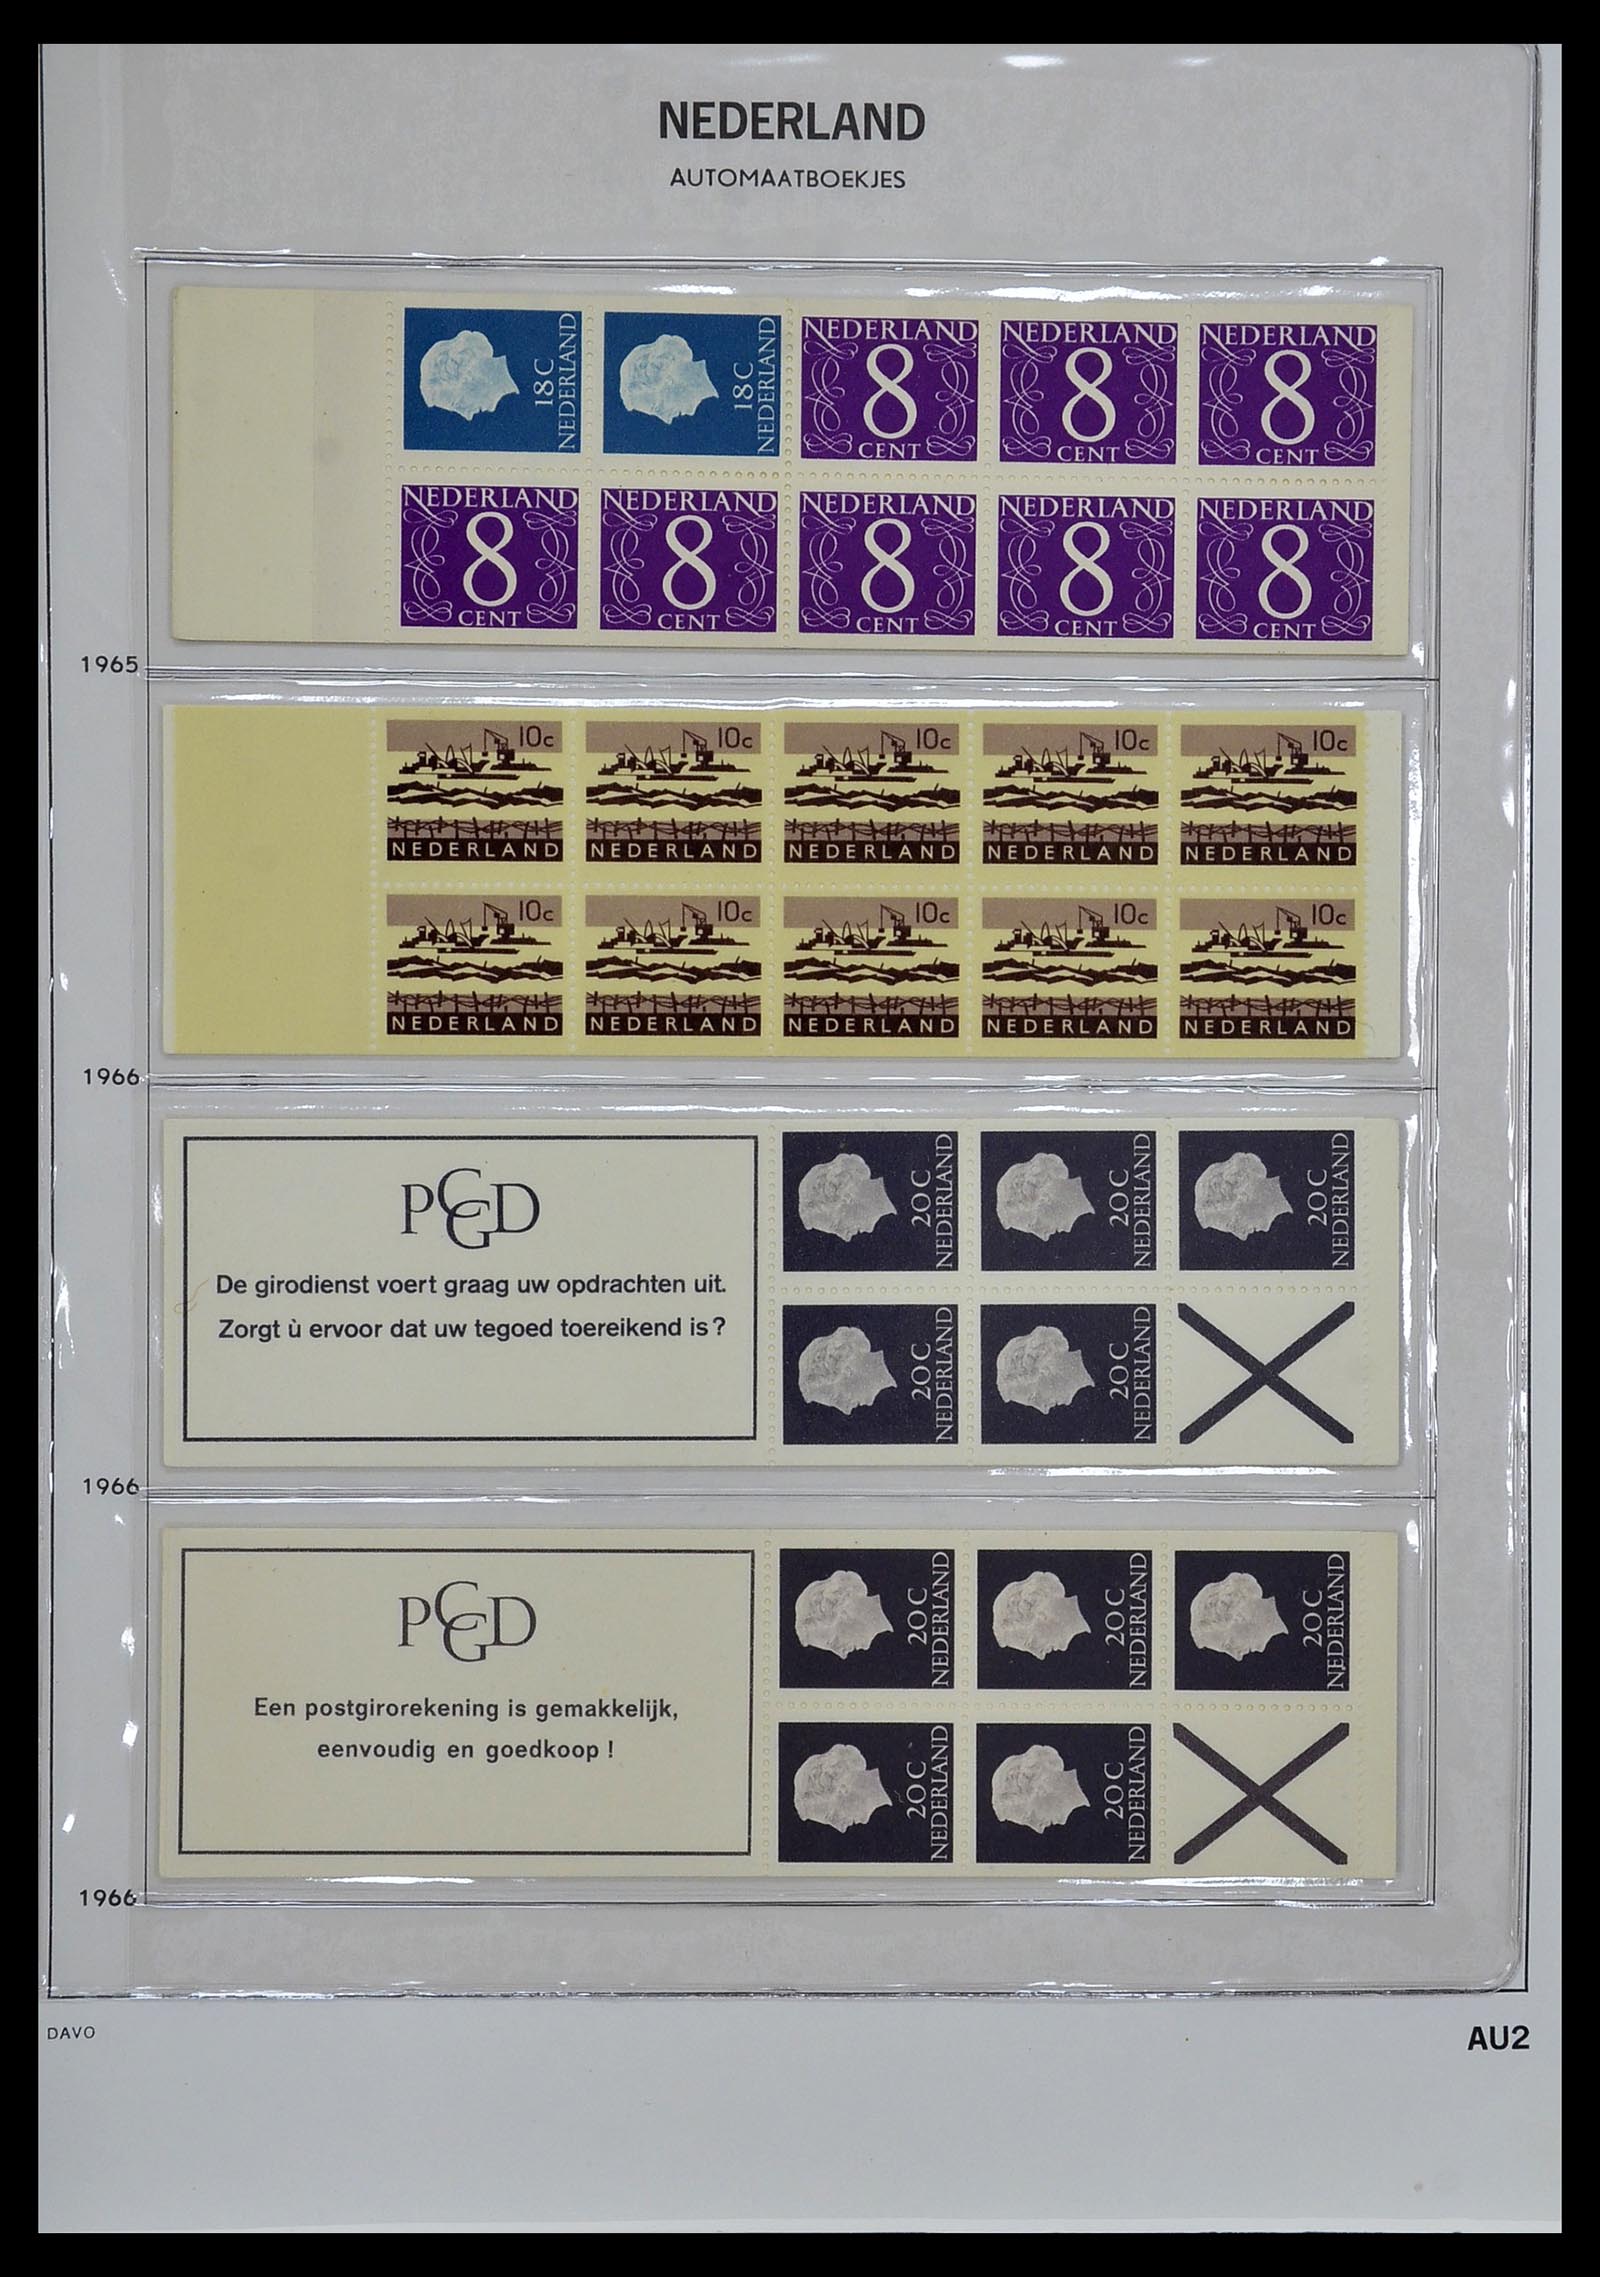 34267 002 - Stamp collection 34267 Netherlands stamp booklets 1964-1991.